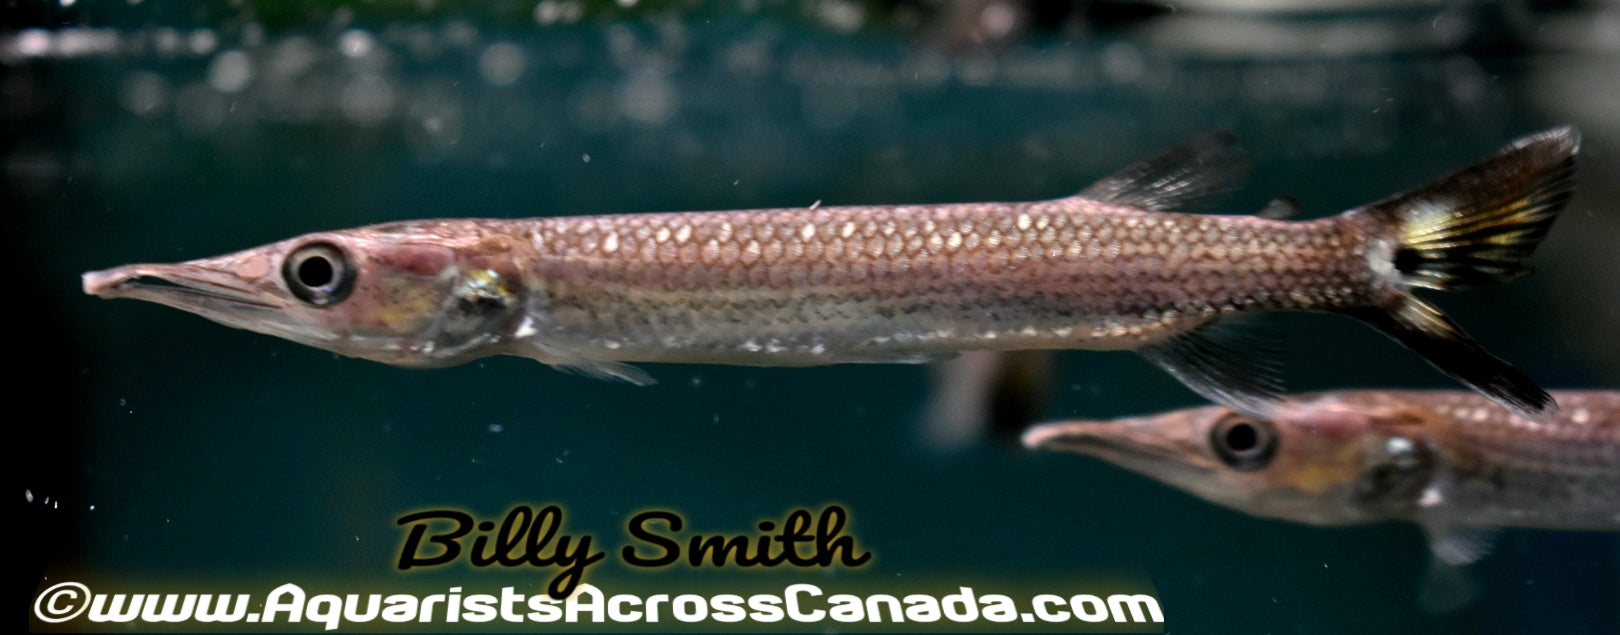 ROCKET GAR (Ctenolucius hujeta) - Aquarists Across Canada